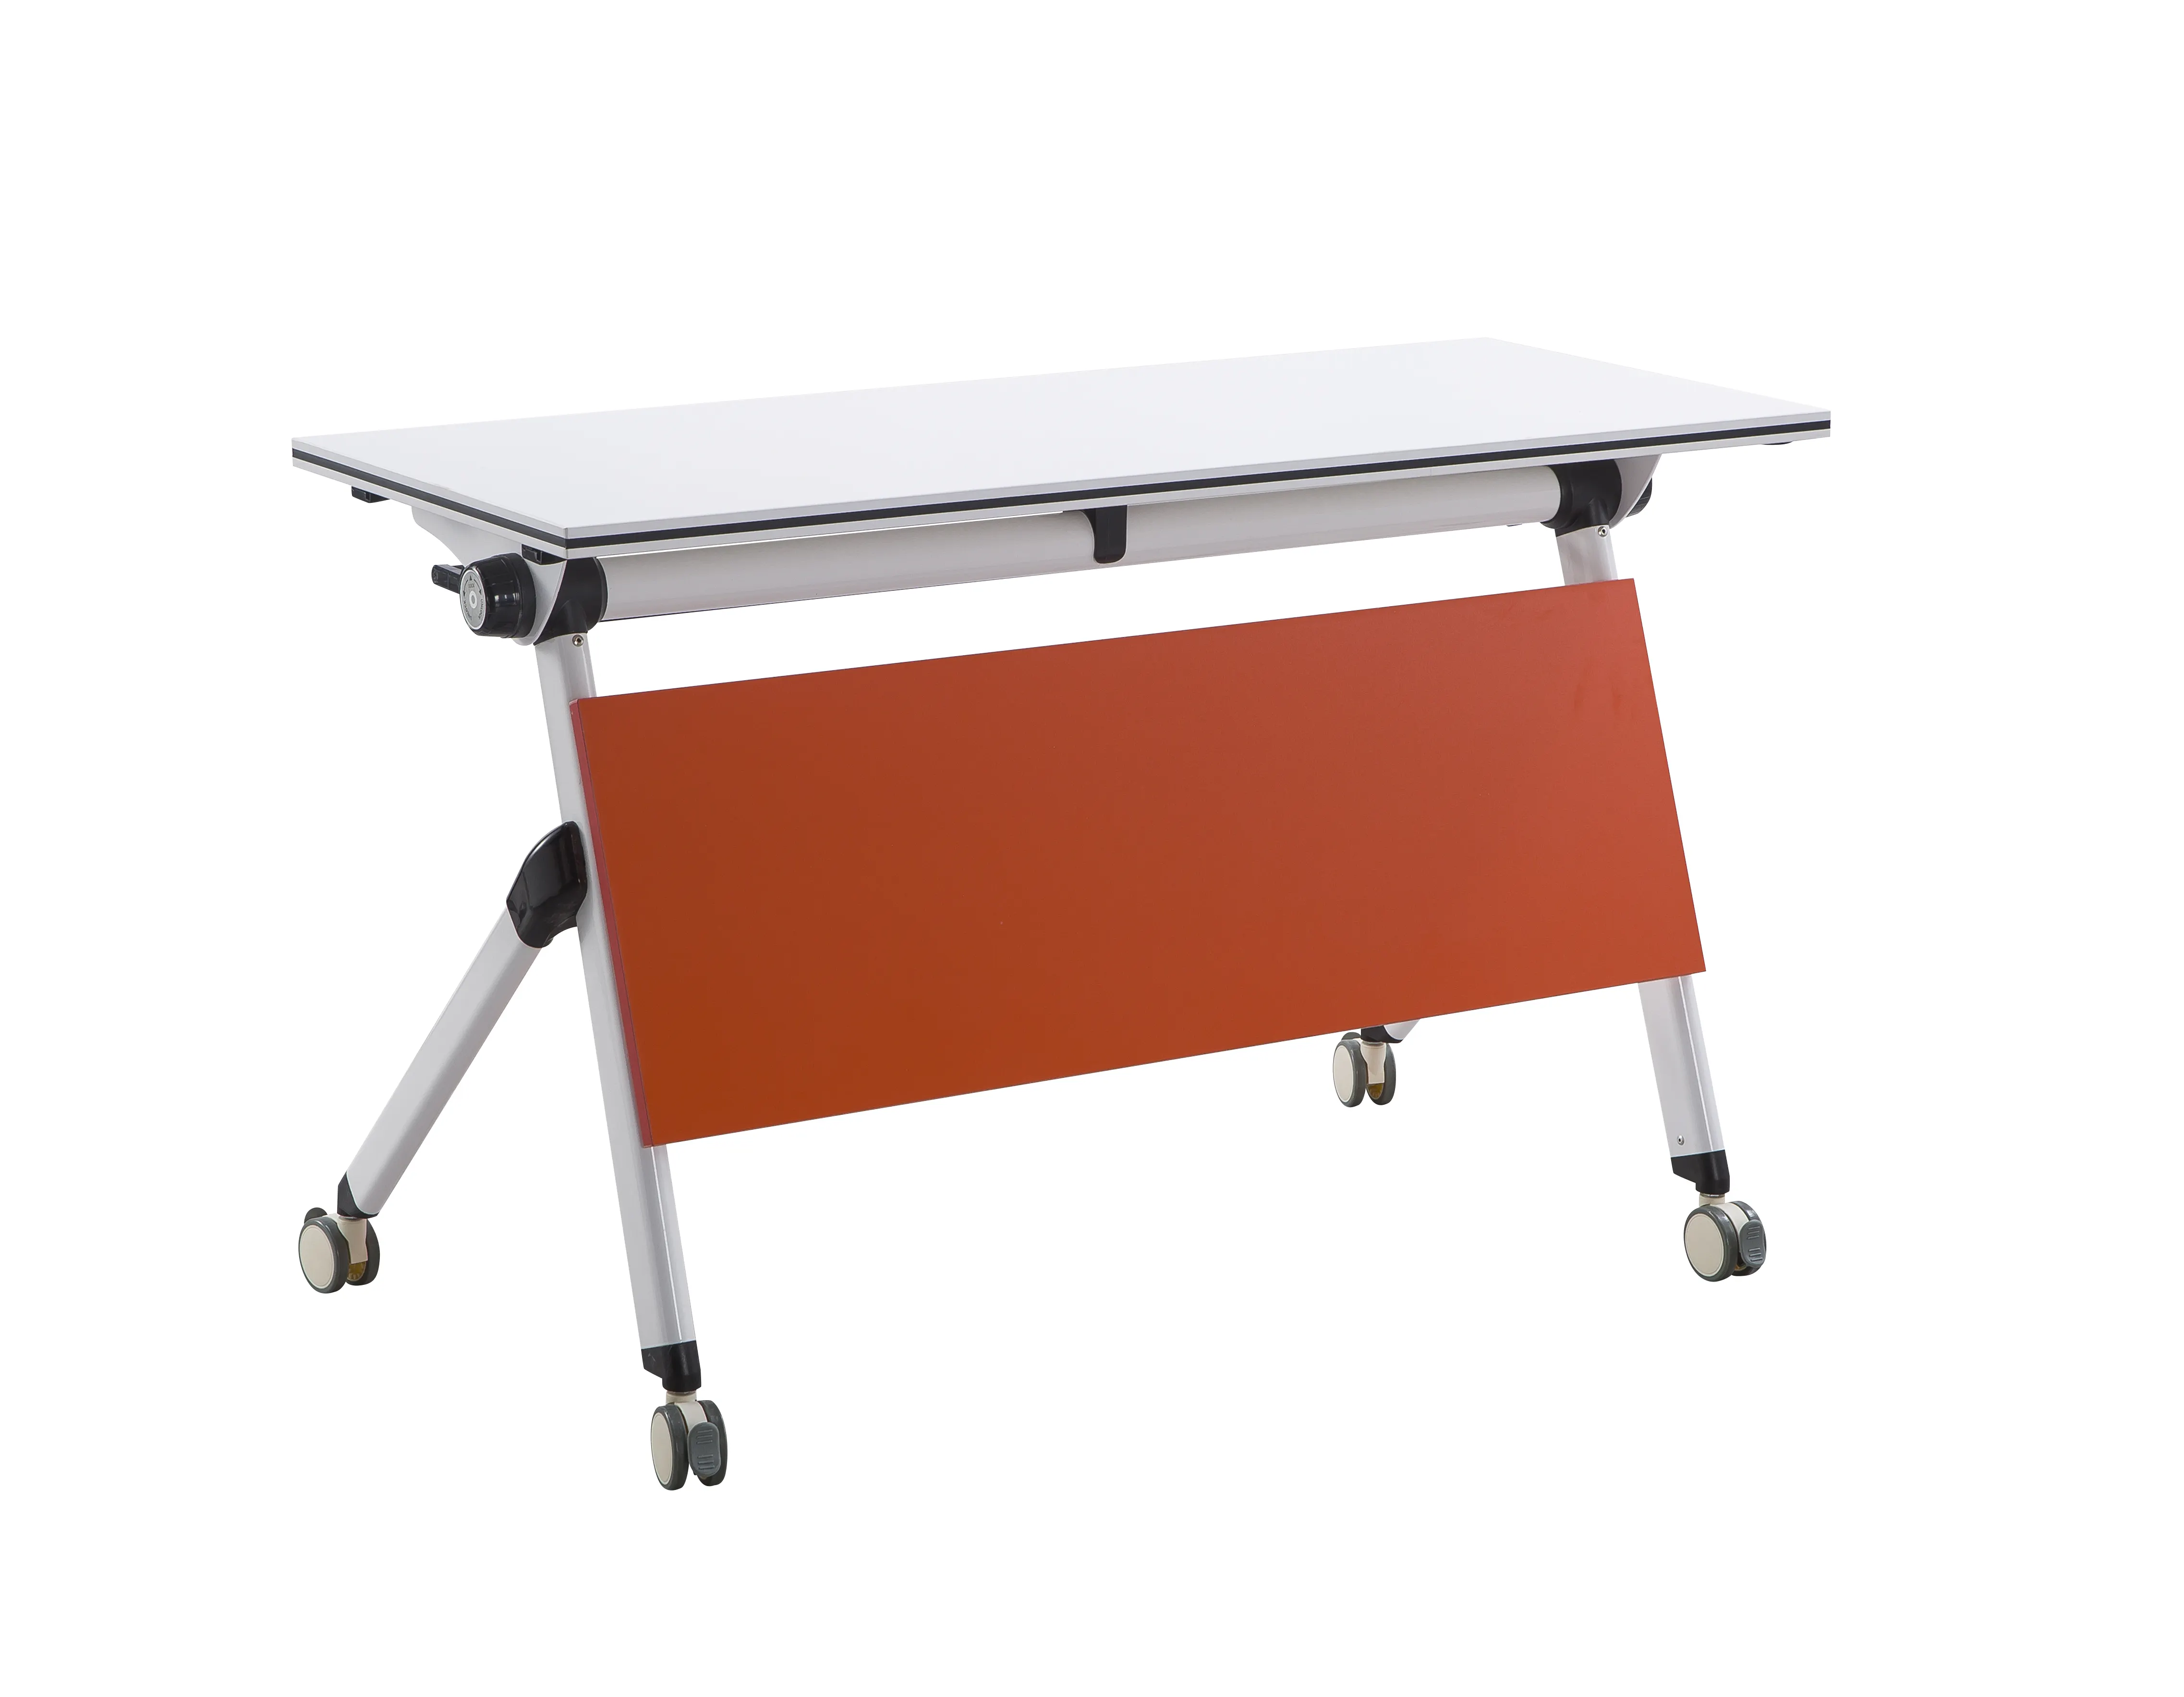 Classroom Foldable Student Desk Table Furniture School Desks Study Folding Table White for Single Student Customized